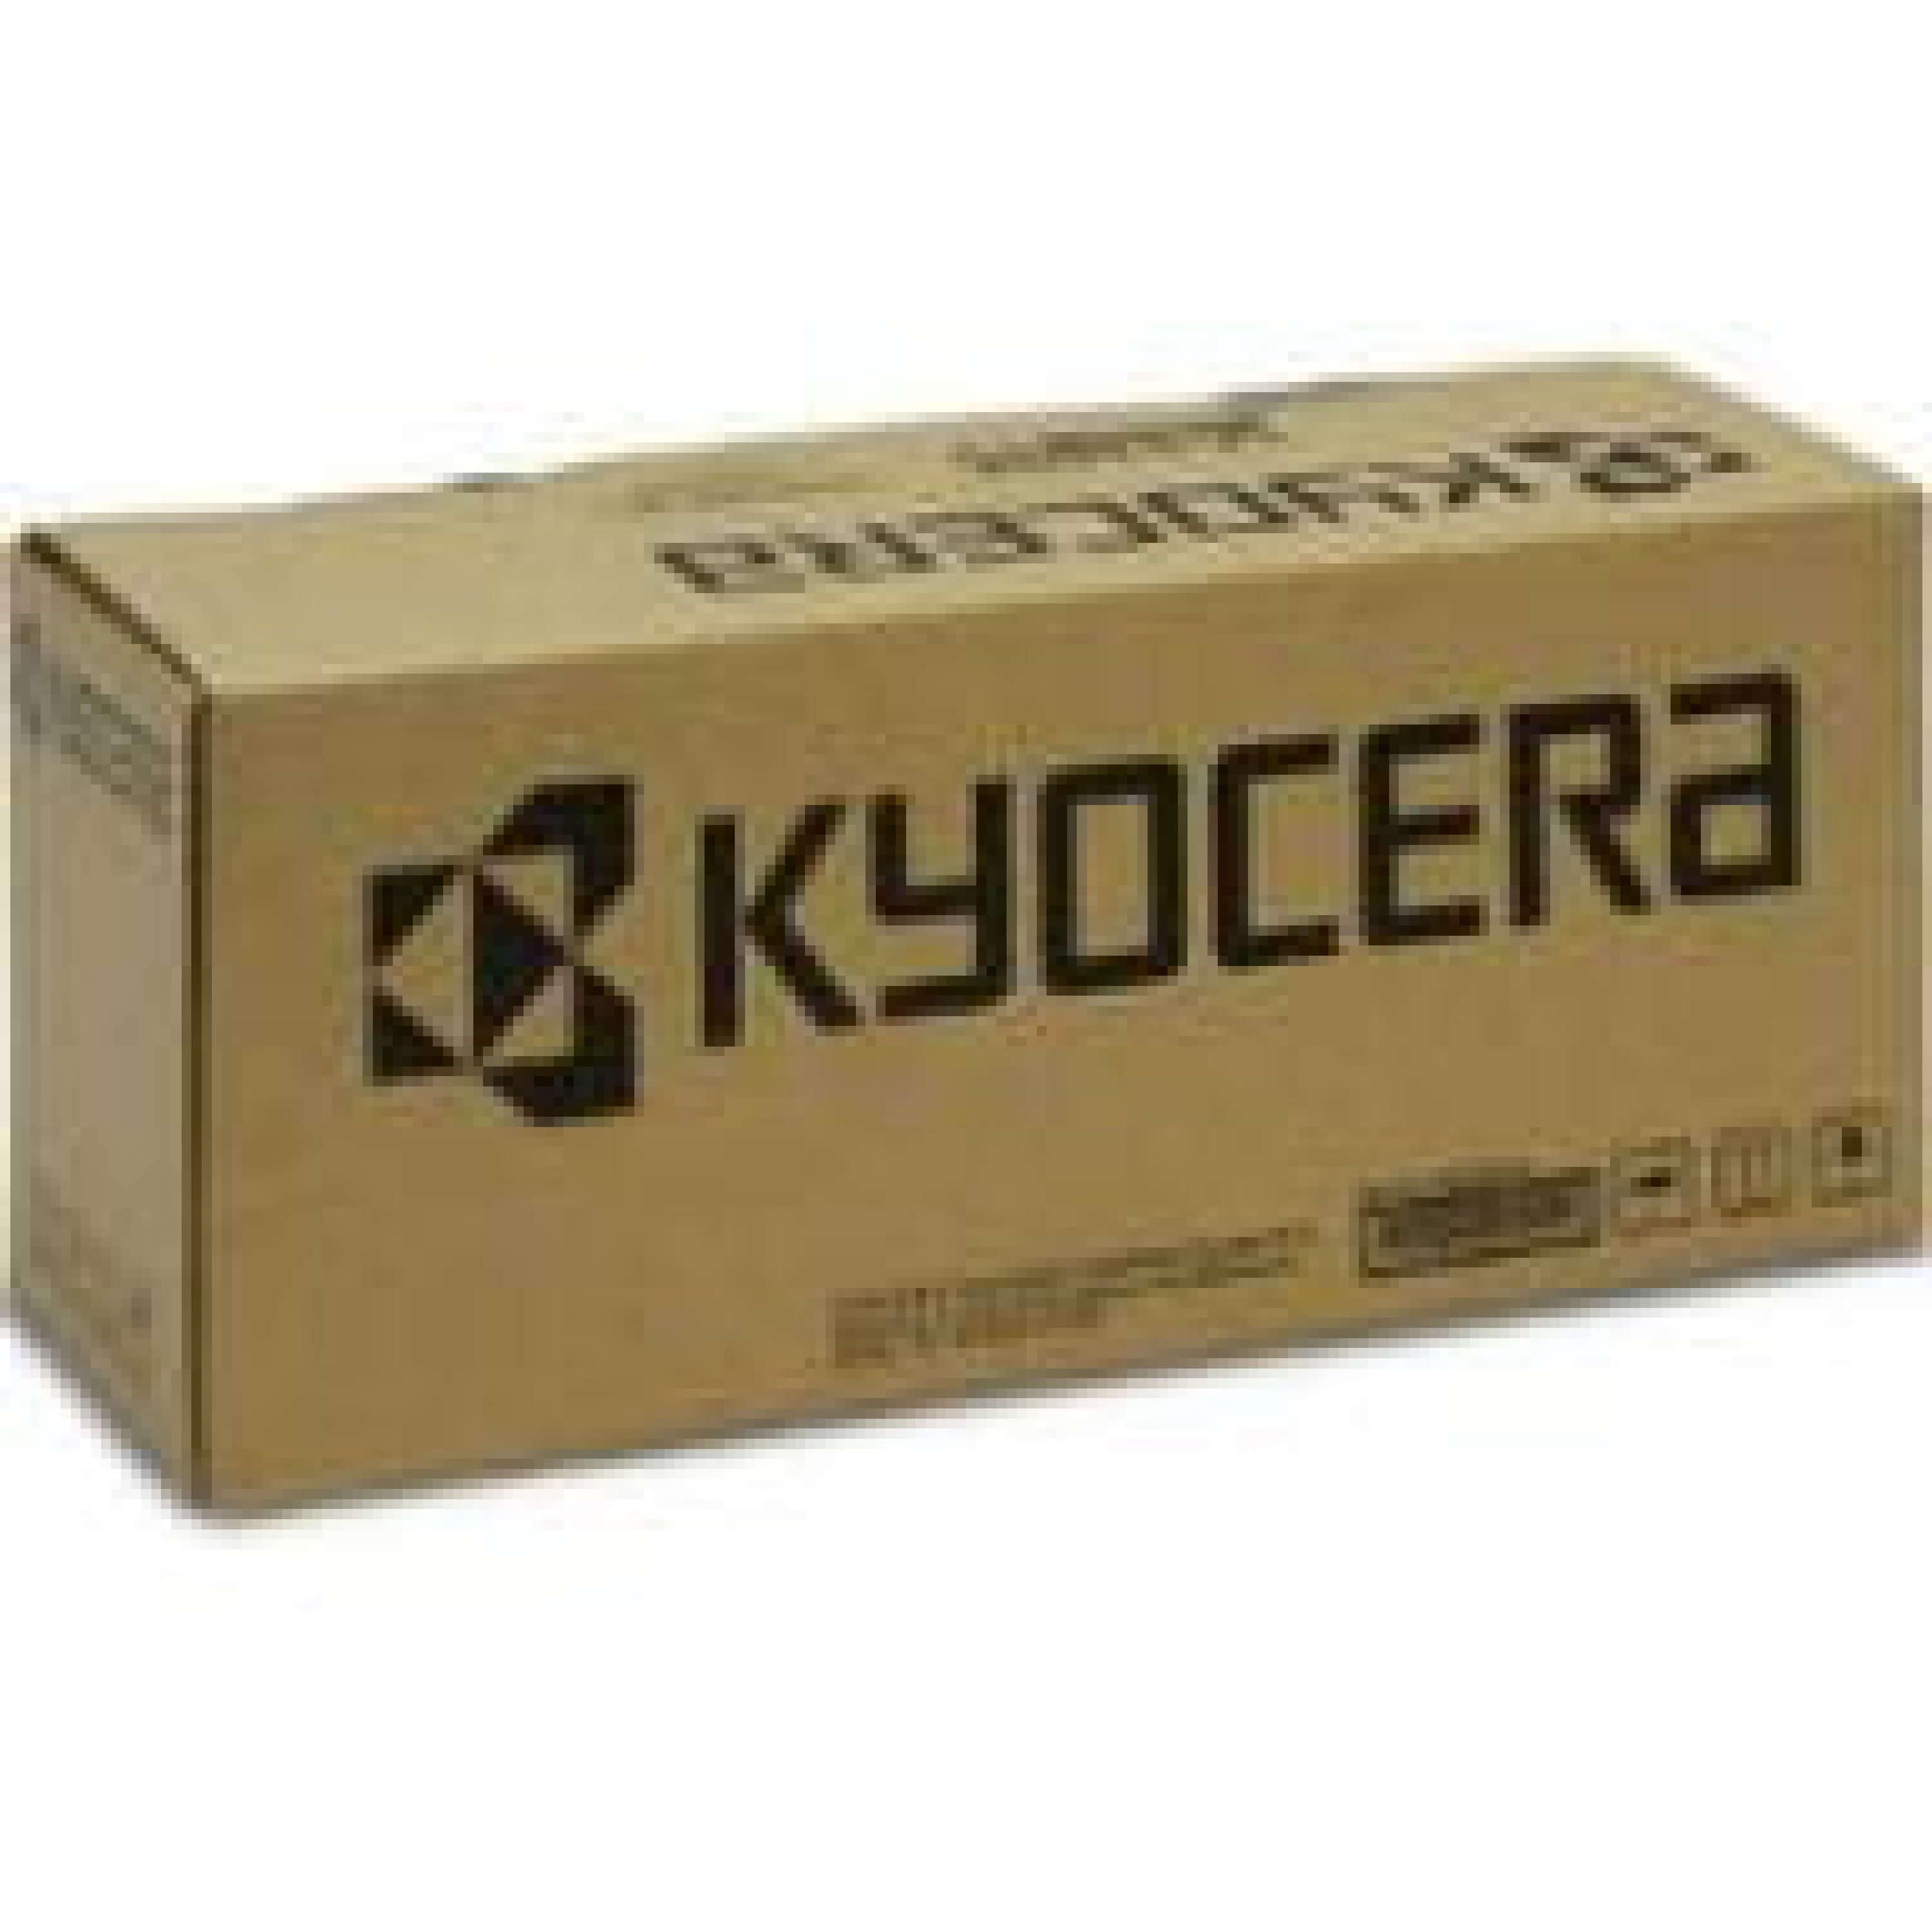 Original Toner Kyocera MA 2100 cfx (1T0C0ABNL1 / TK-5430M)